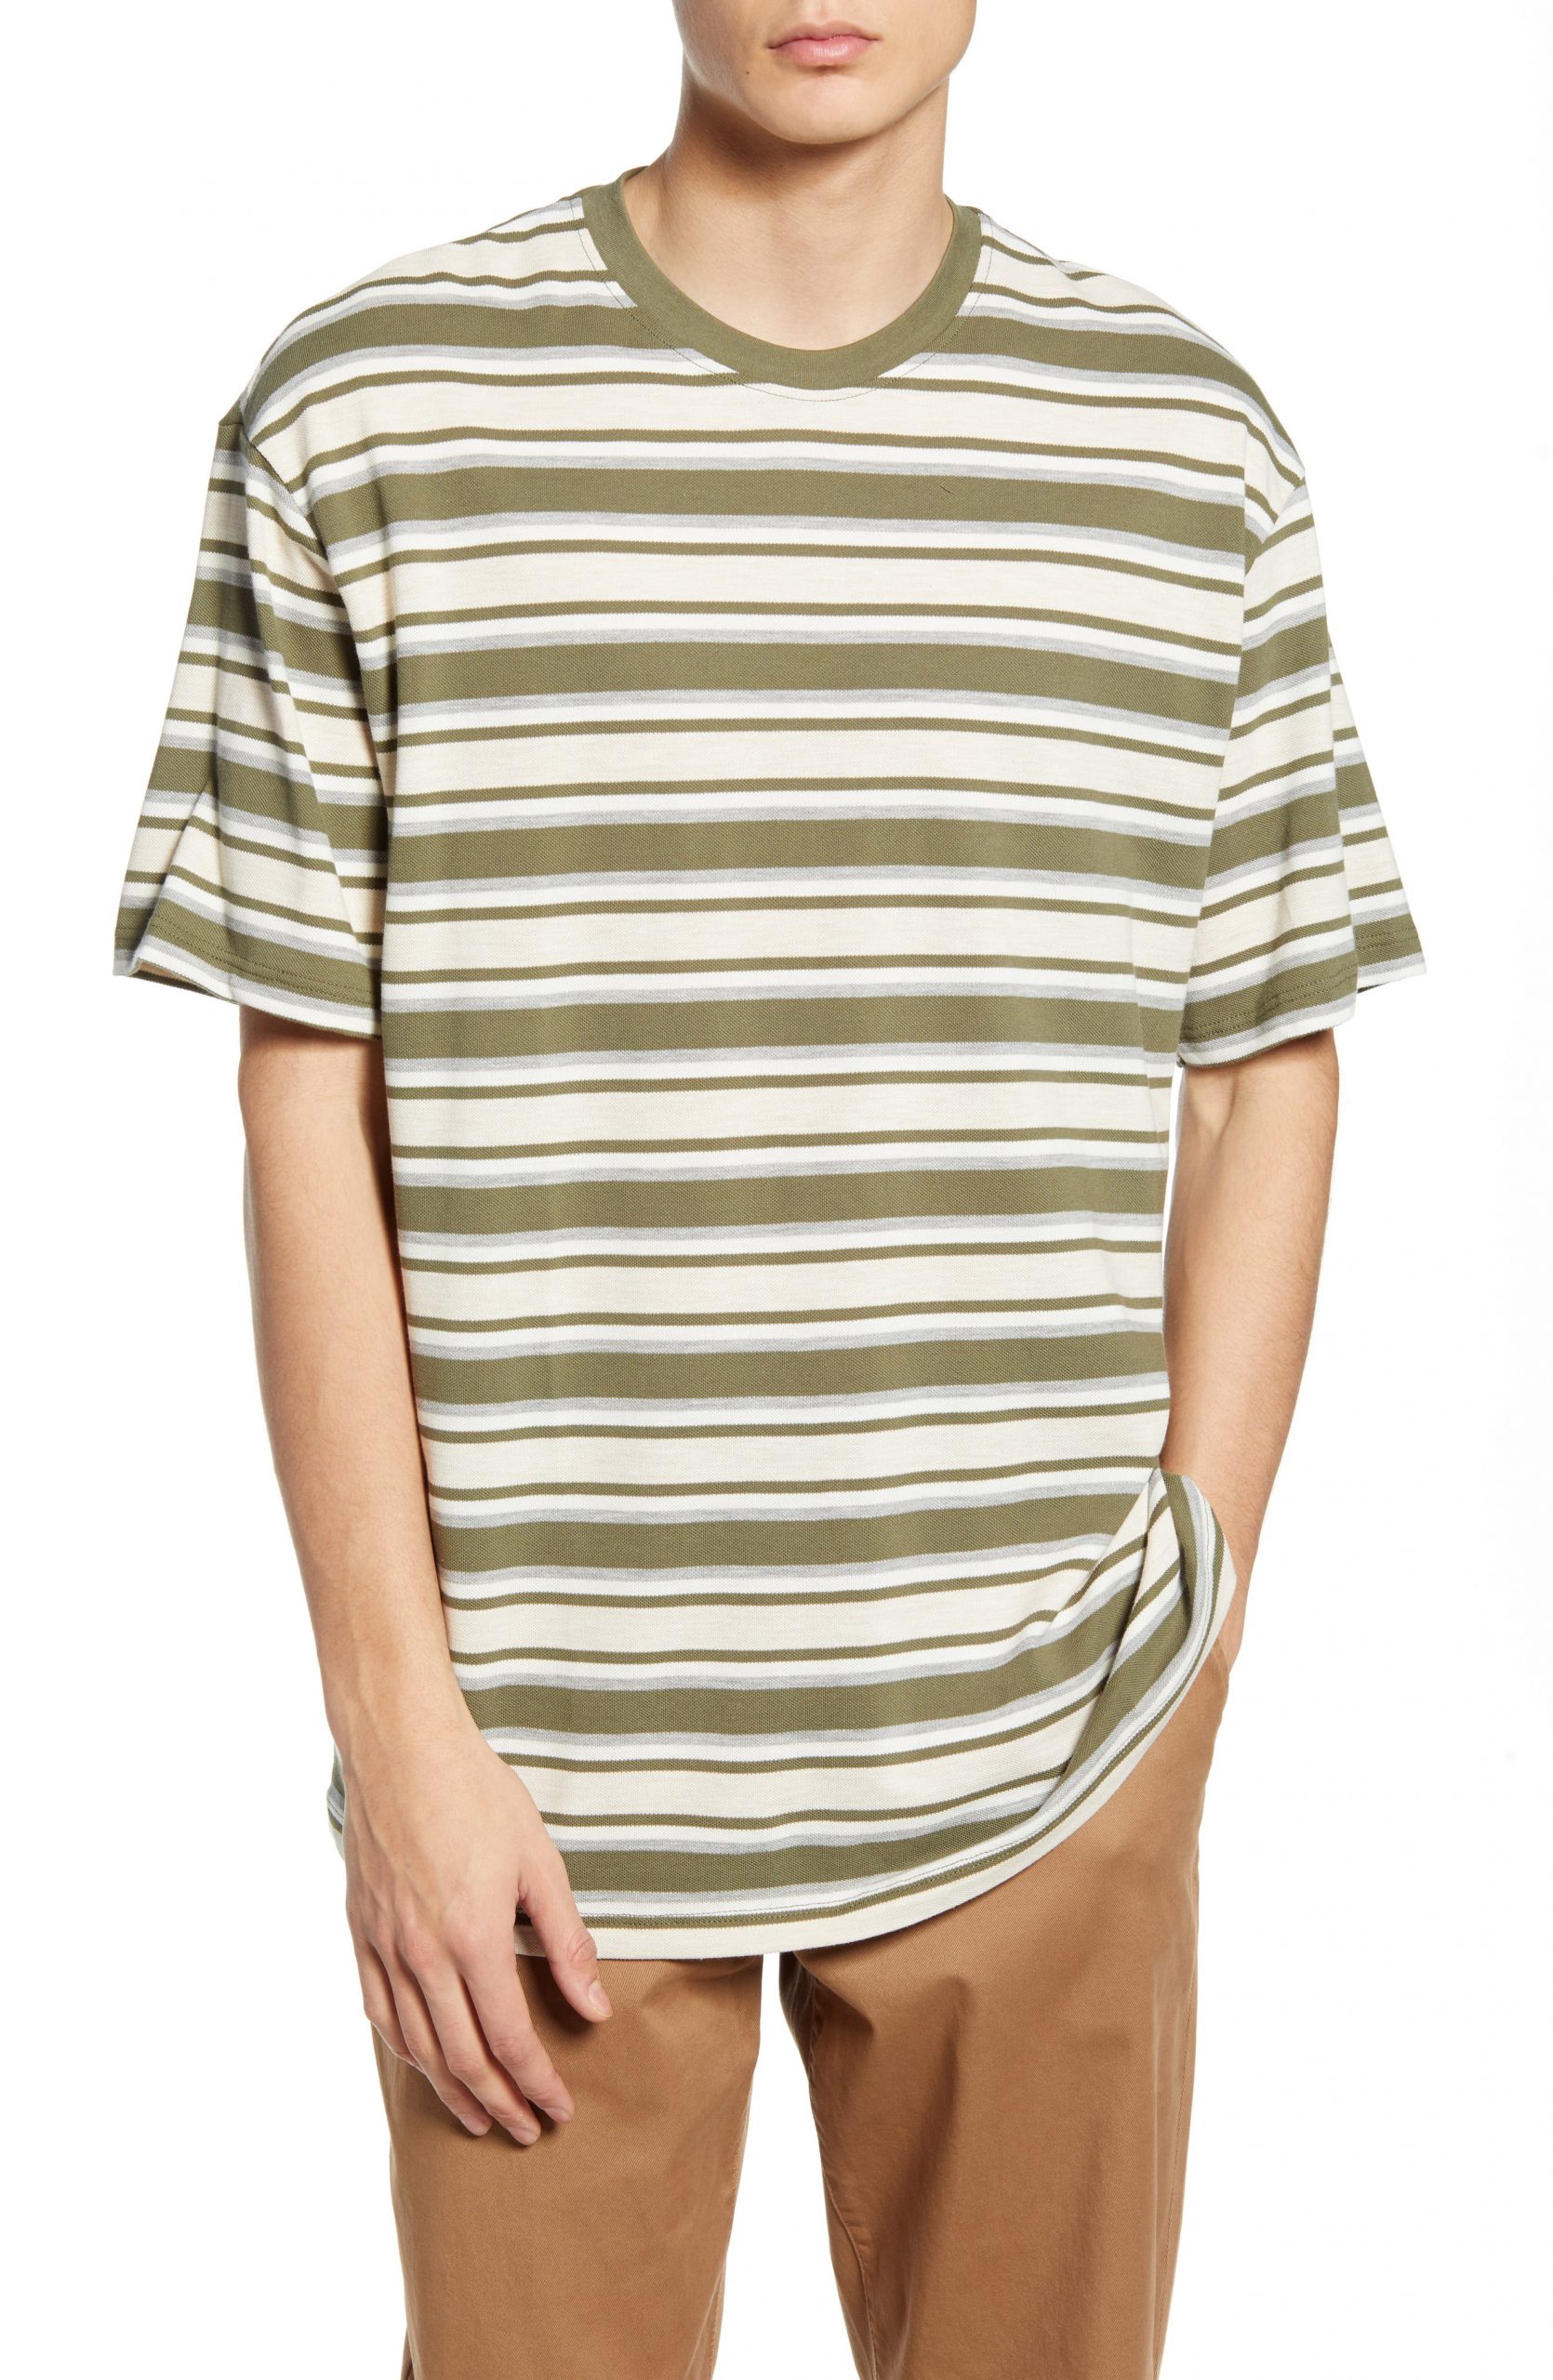 Men’s Topman Stripe Pique T-Shirt, Size XX-Small - Green | The Fashionisto